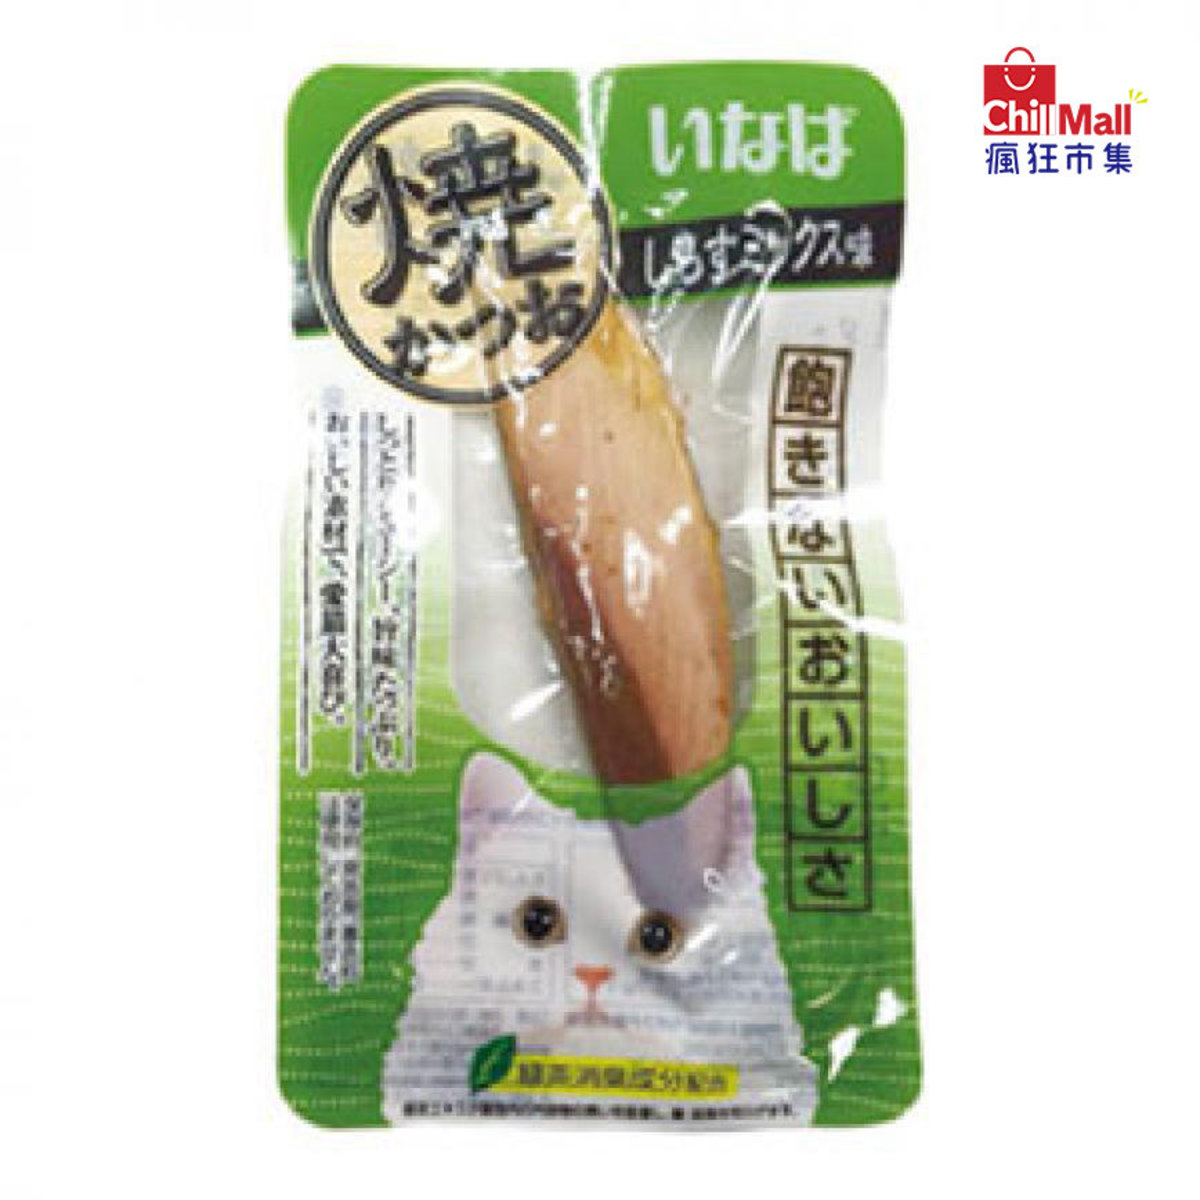 CIAO 貓零食 日本燒鰹魚條 しらすミックス味 小包裝 15g [雜錦銀魚味] (綠) (QSC-26)